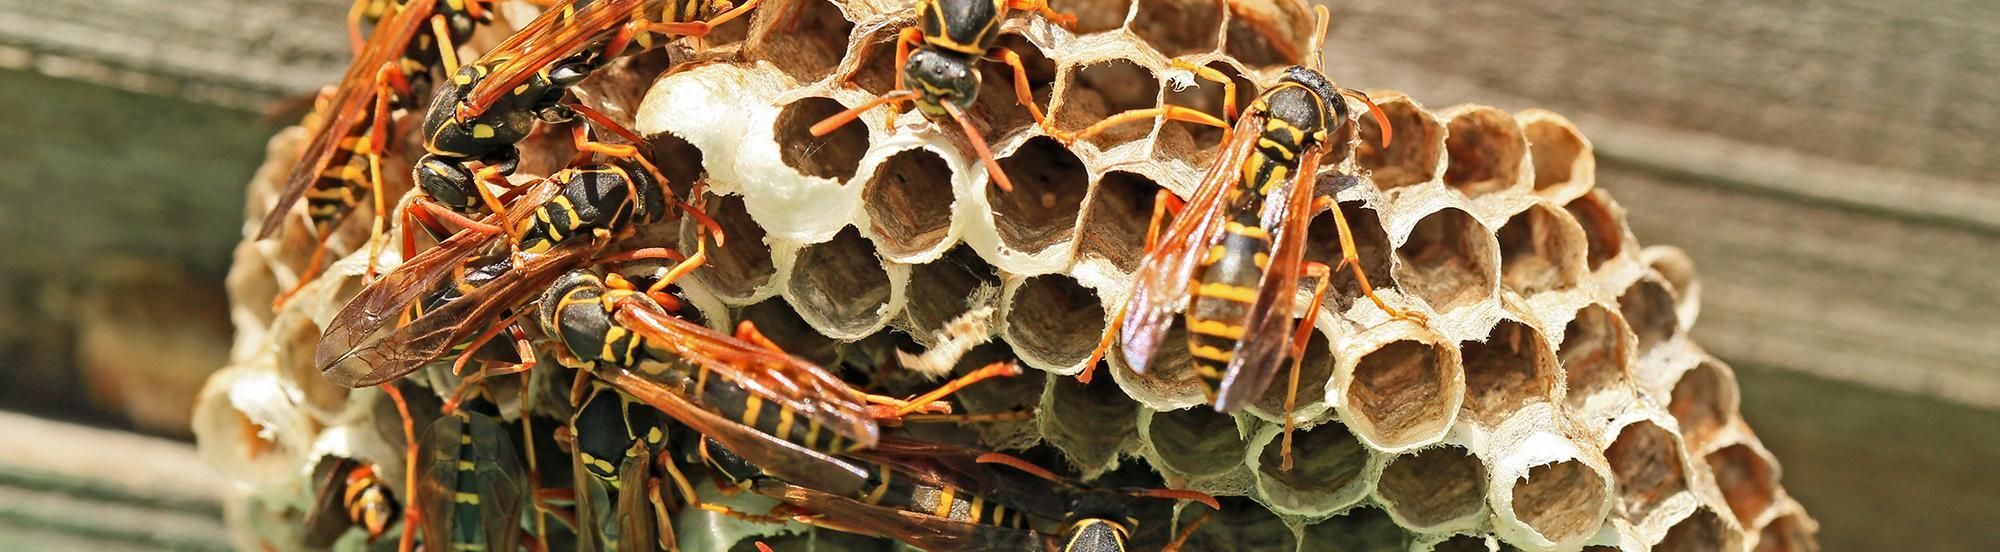 paper wasps building nest